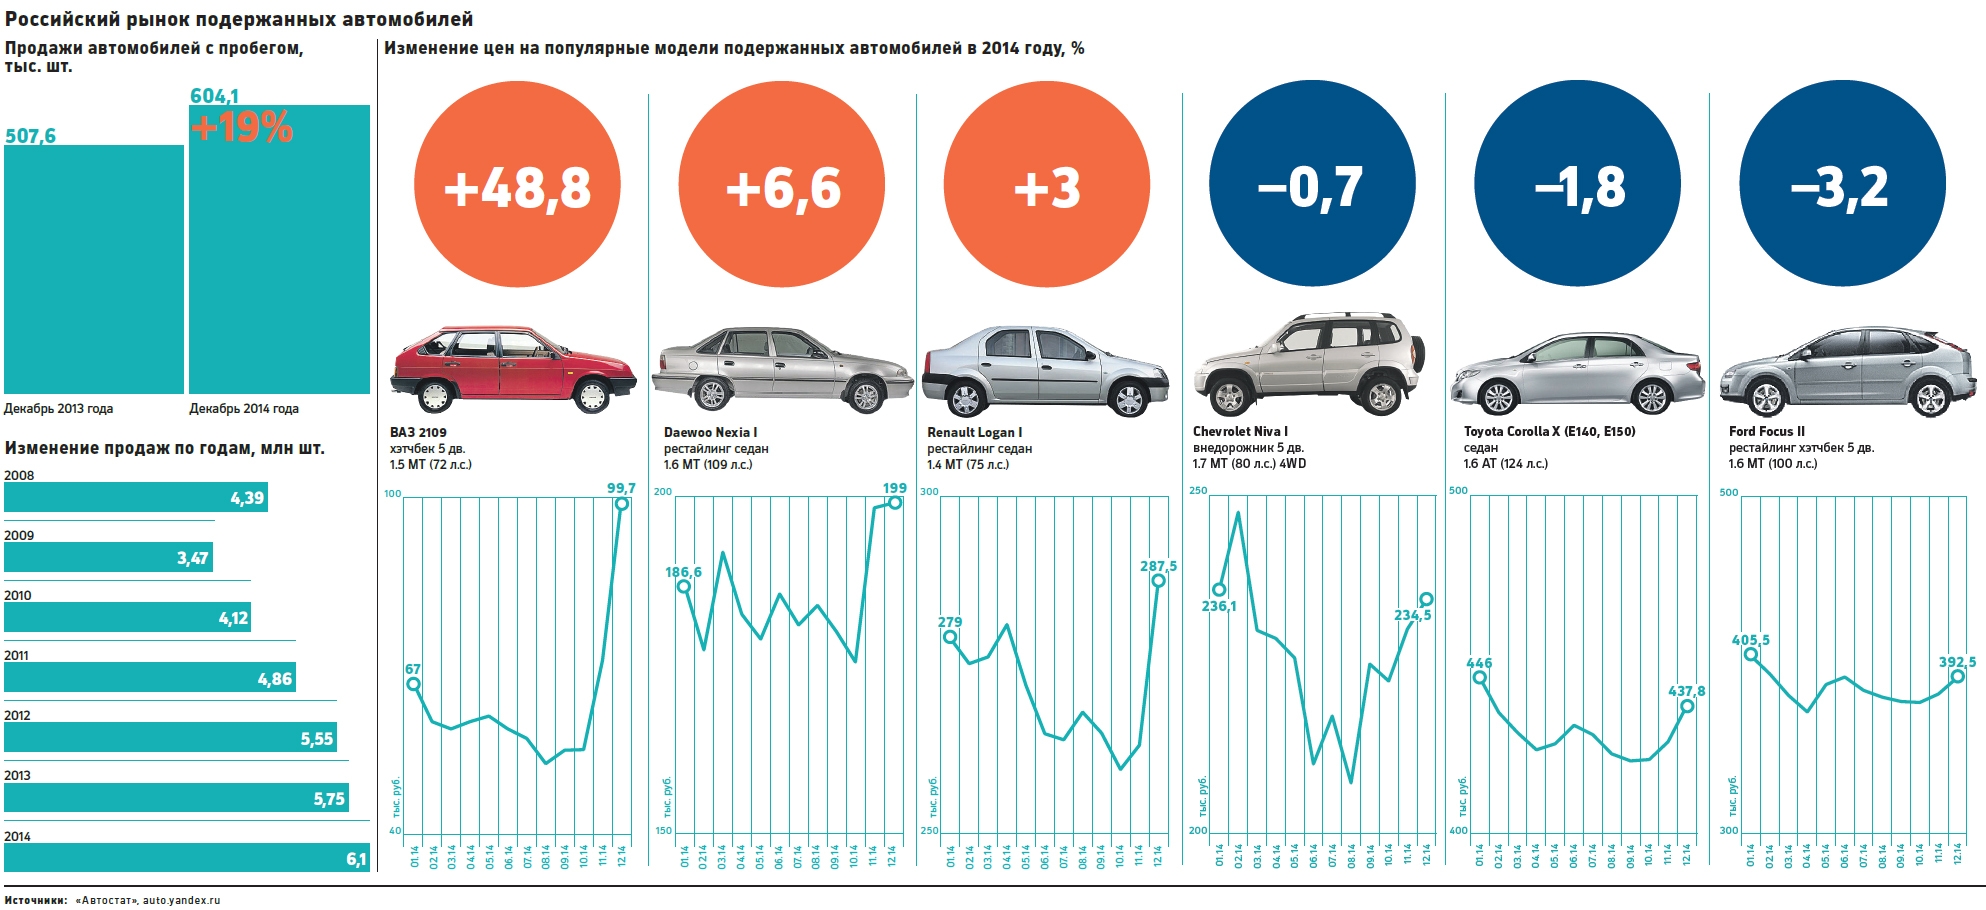 Пробег трафика. График стоимости автомобилей. Стоимость машин график. График спроса на автомобили. Динамика продаж автомобилей в России по годам.